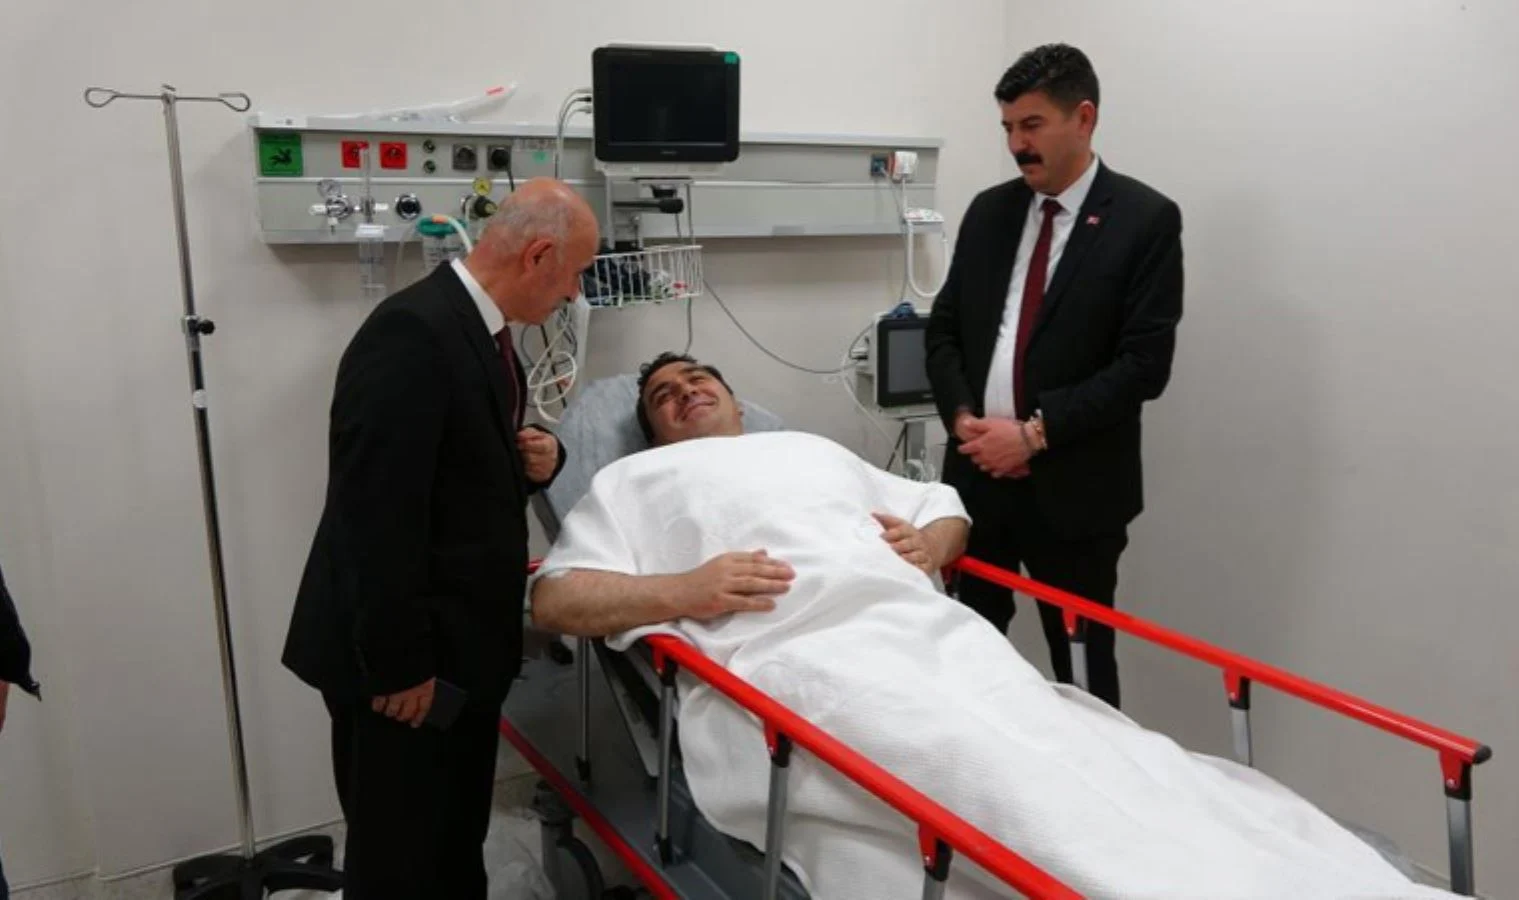 CHP Milletvekili Ulaş Karasu Yozgat’ta Trafik Kazası Geçirdi.